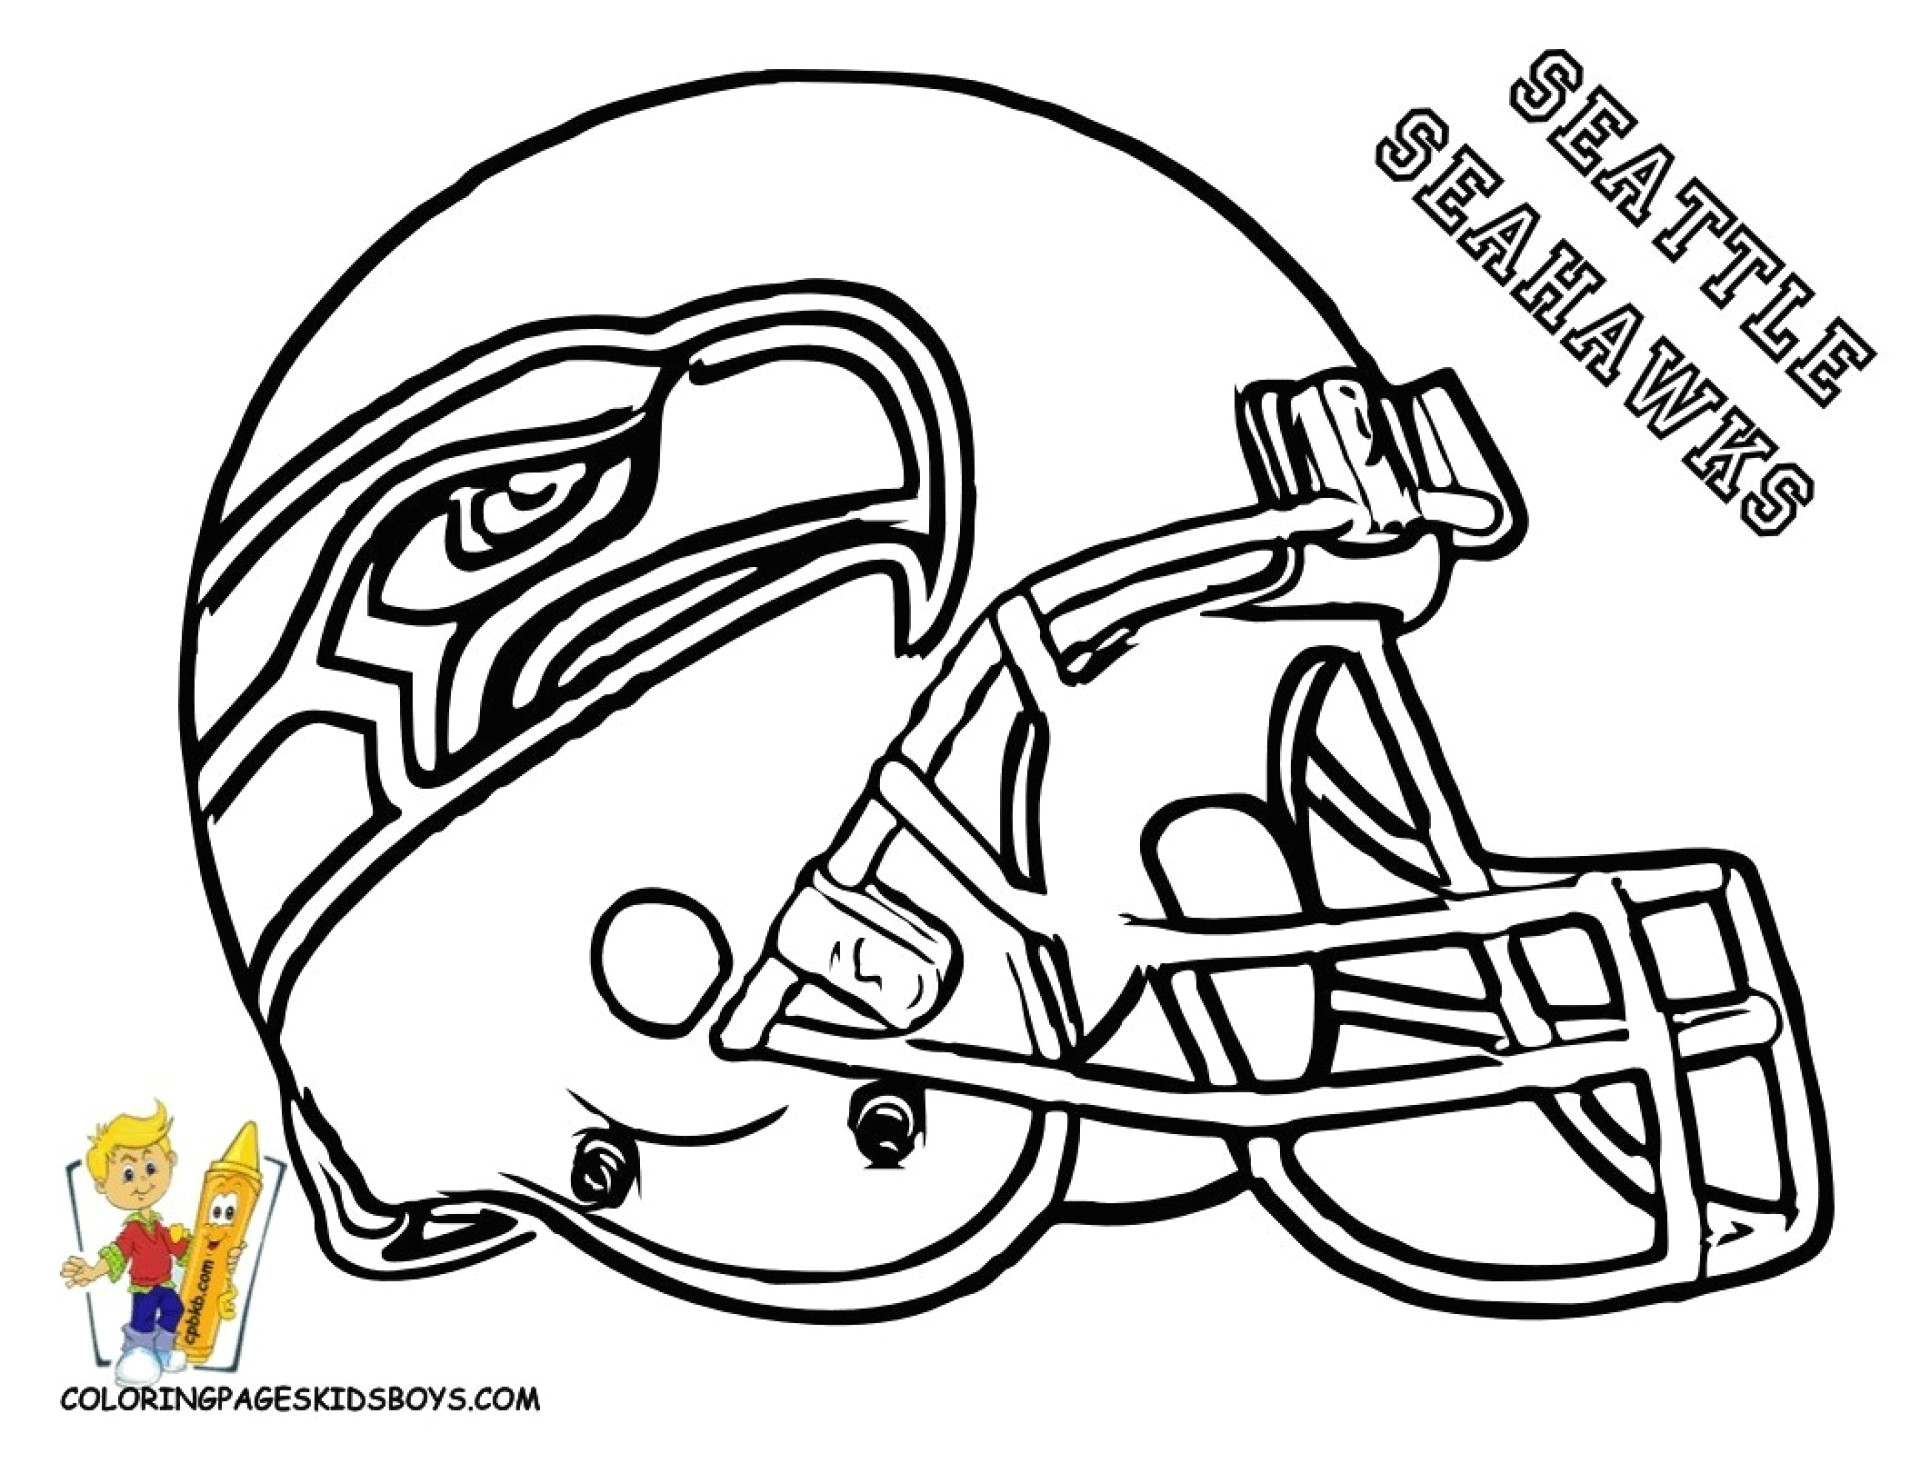 Drawing 49ers Logo 012 Malbuch 49ers Potentialplayers